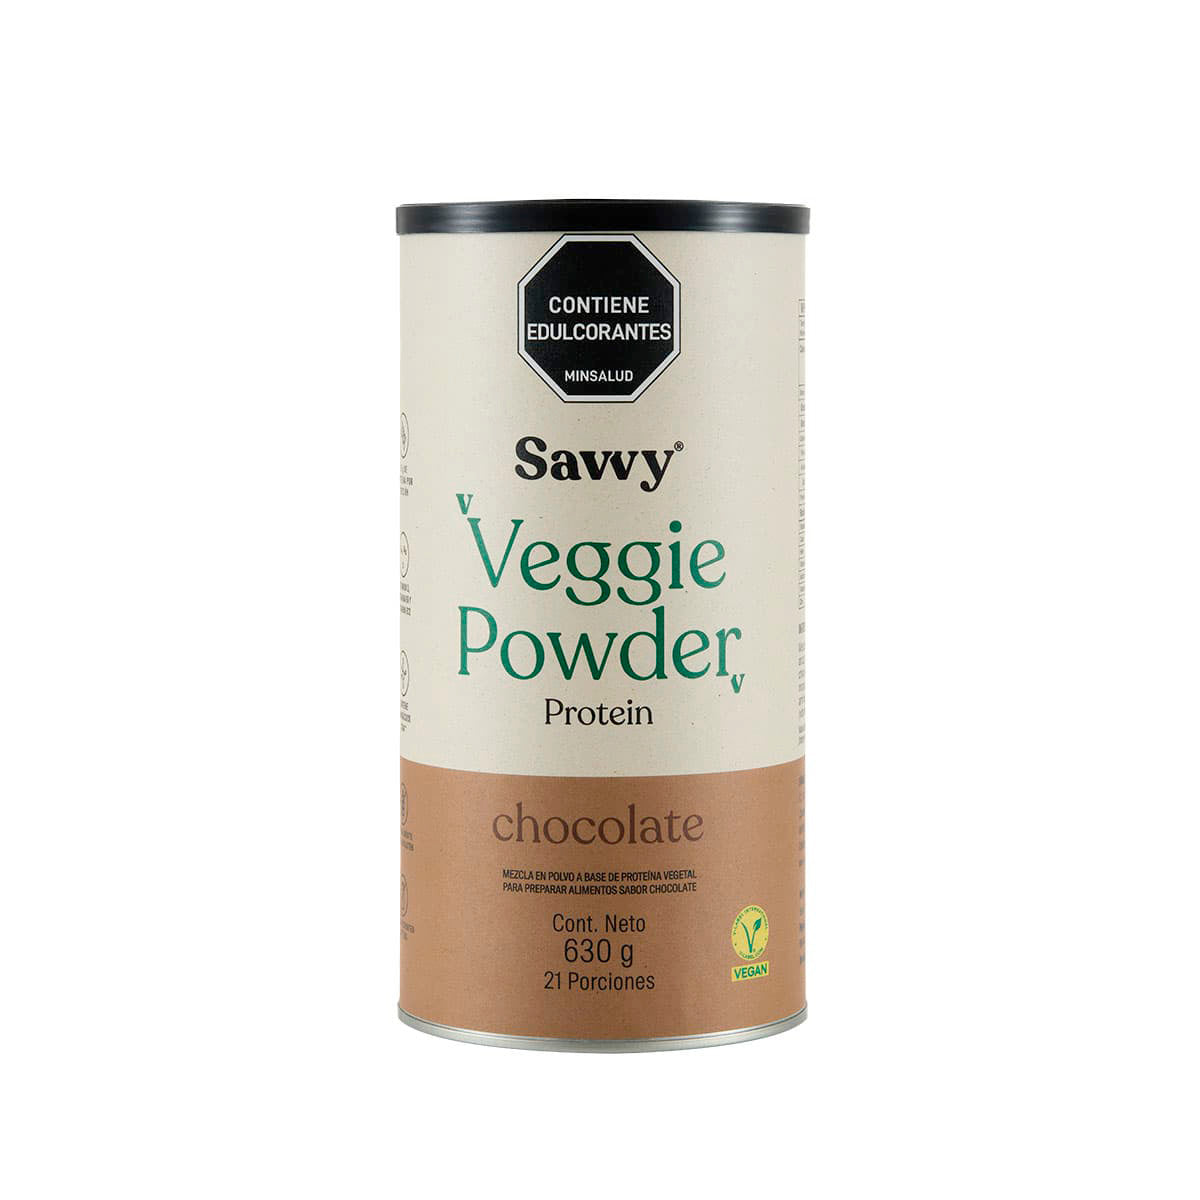 Veggie Powder chocolate 630g